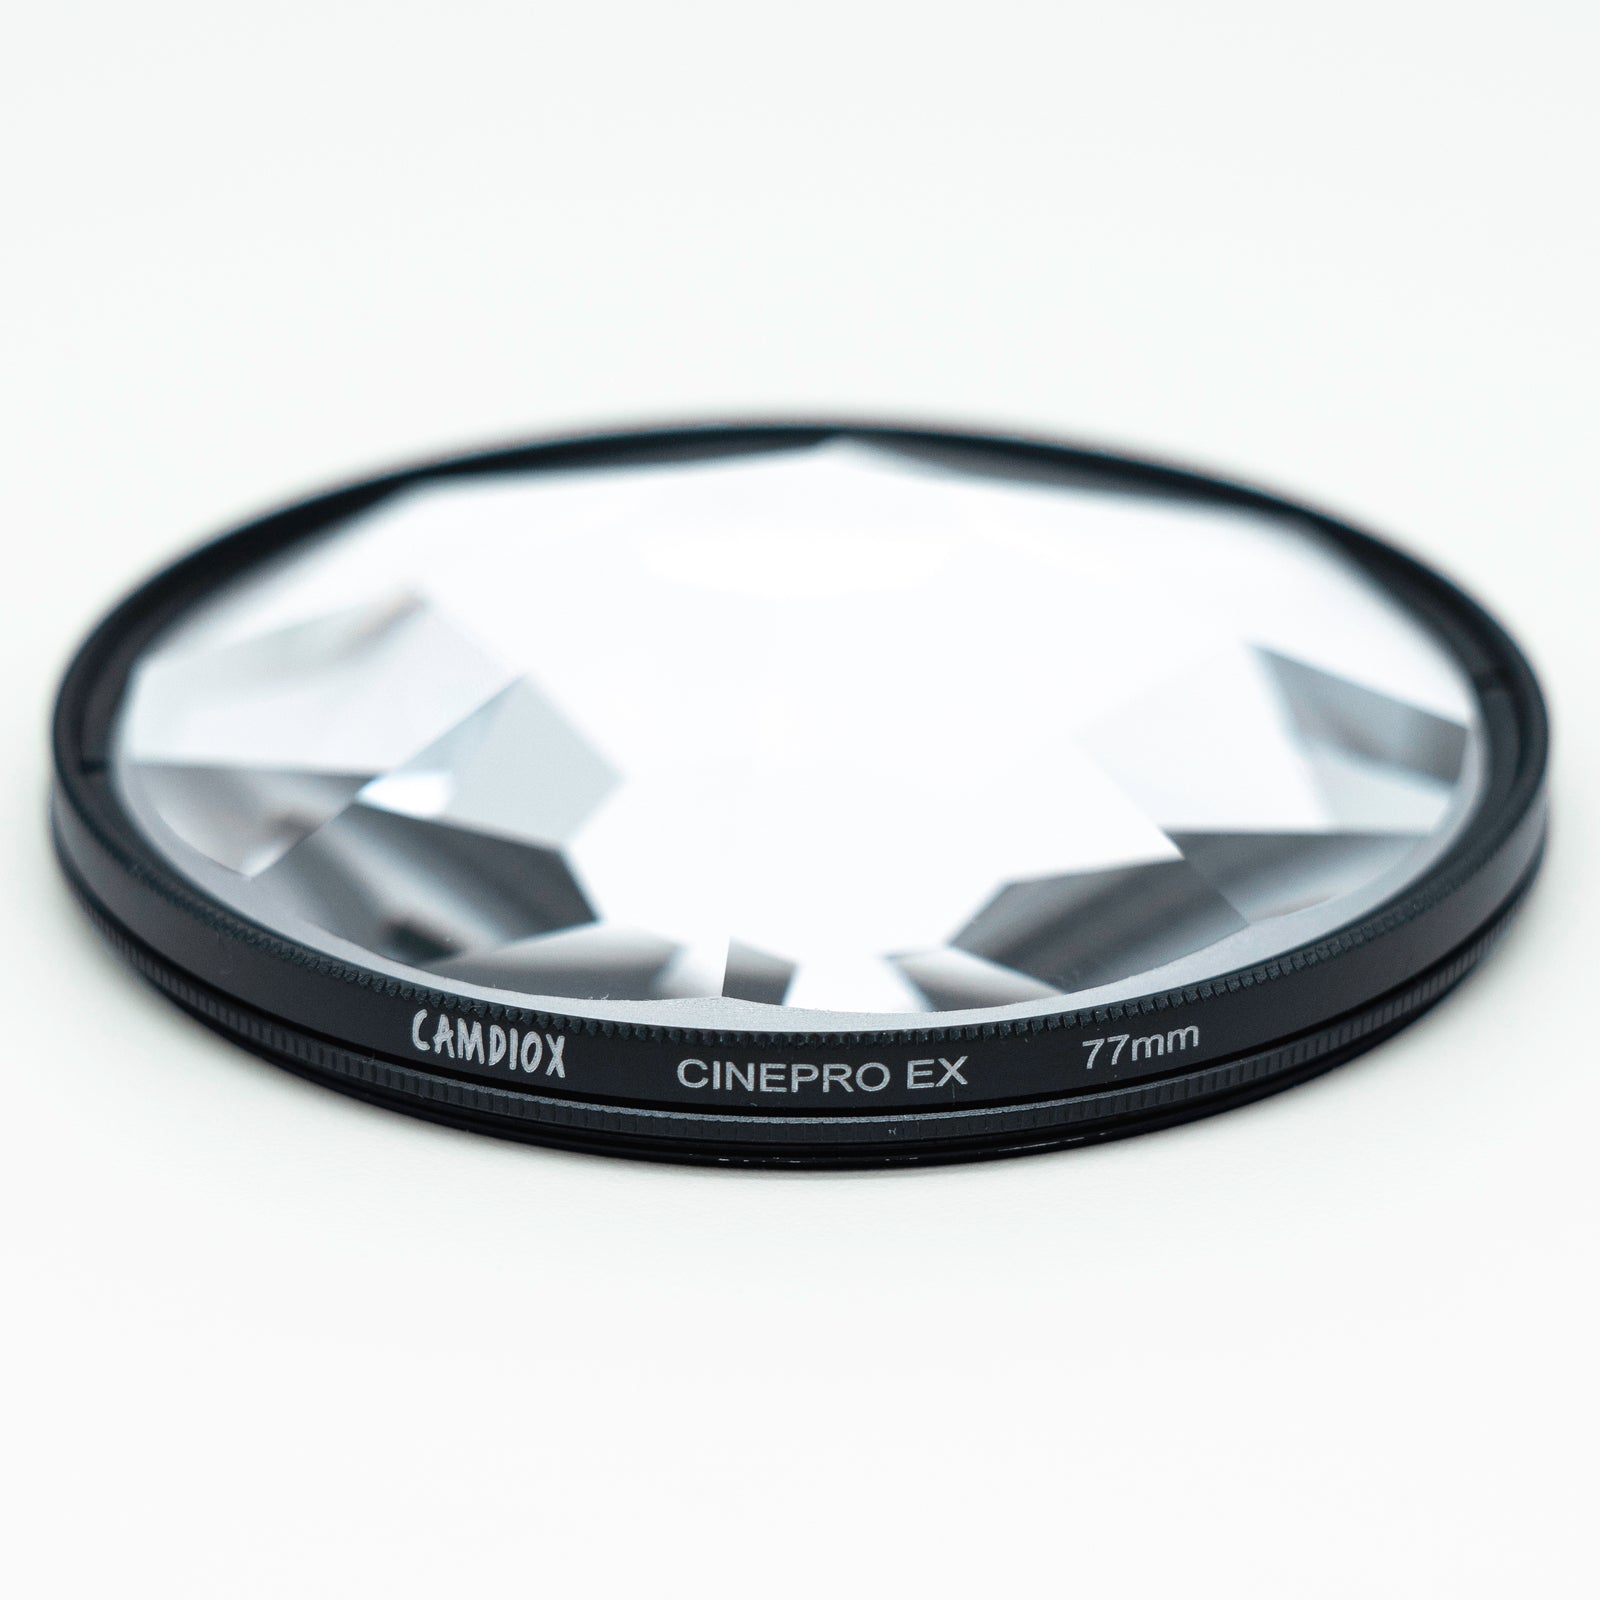 Camdiox Cinepro Pro Filter - Kaleidoscope - effect filter for Canon Nikon Sony Olympus Leica DSLR mirrorless camera lenses